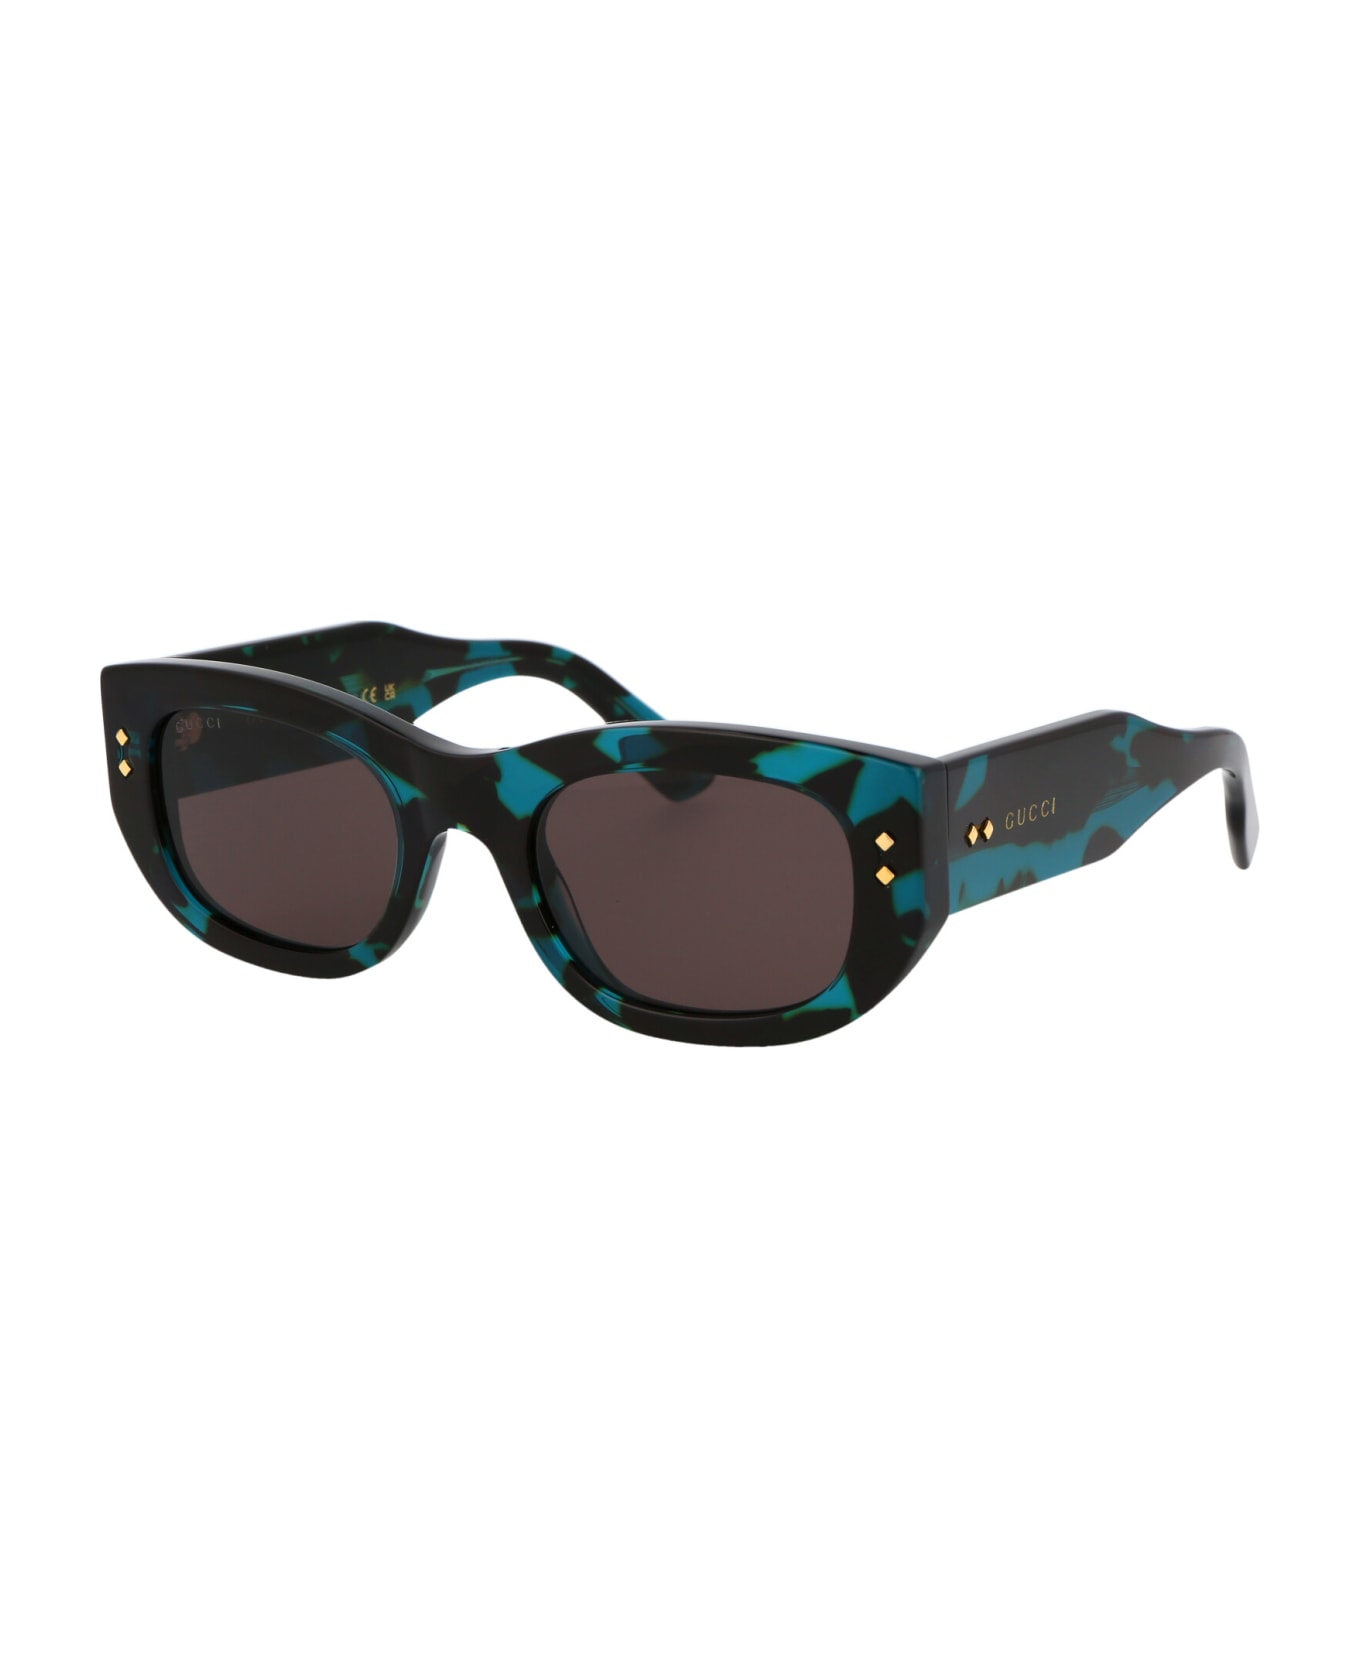 Gucci Eyewear Gg1215s Sunglasses - 001 HAVANA HAVANA GREY